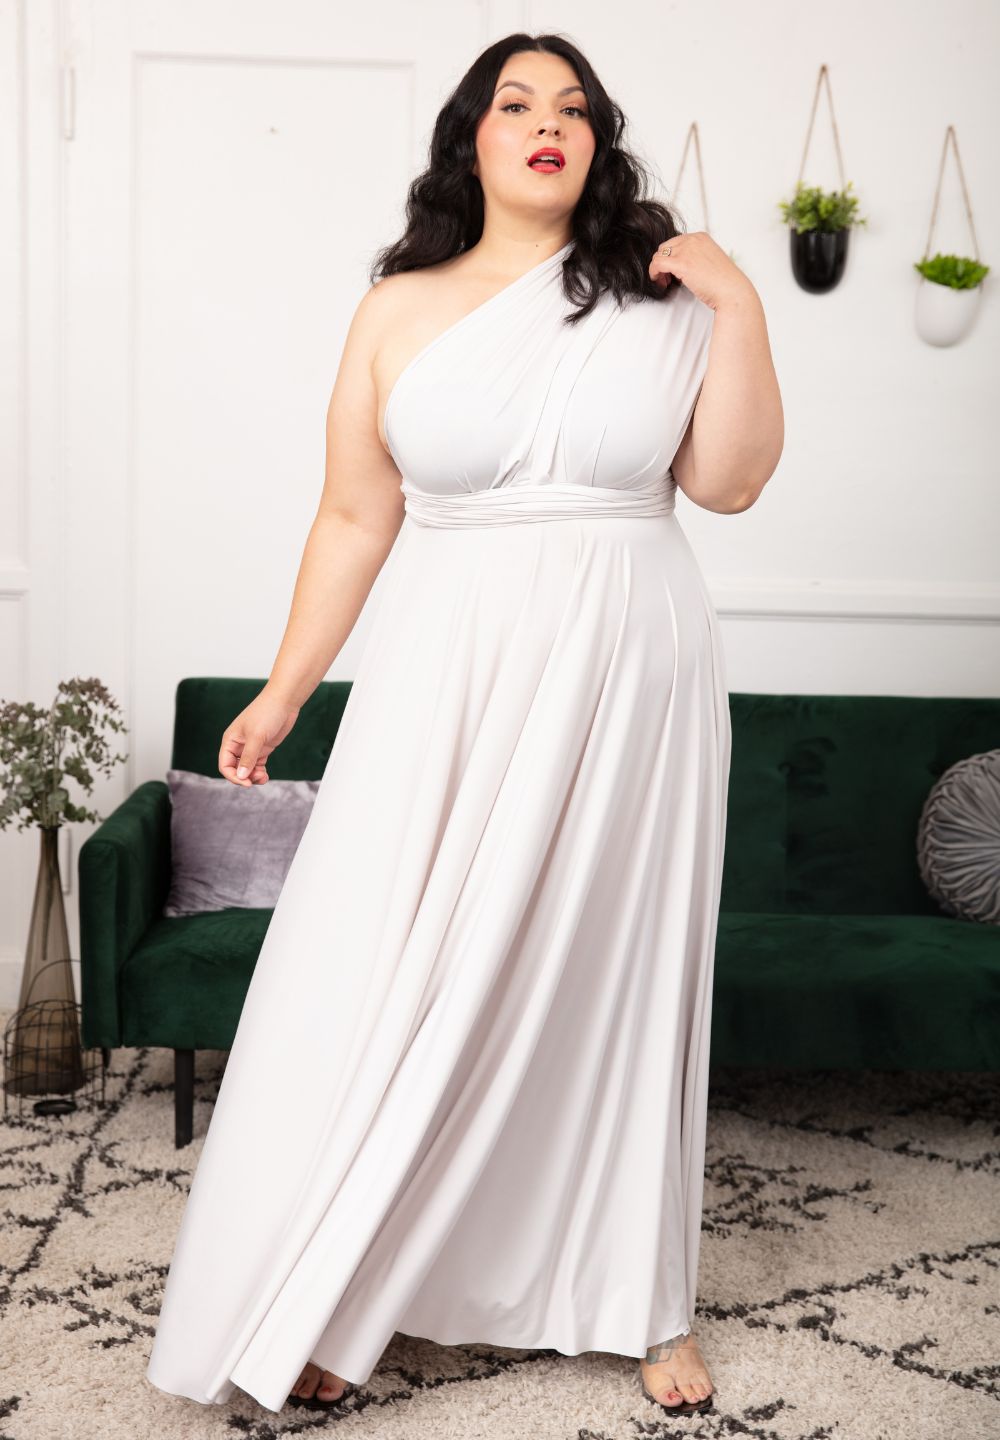 Women's Plus Size Tops, Eternity Maxi Dress